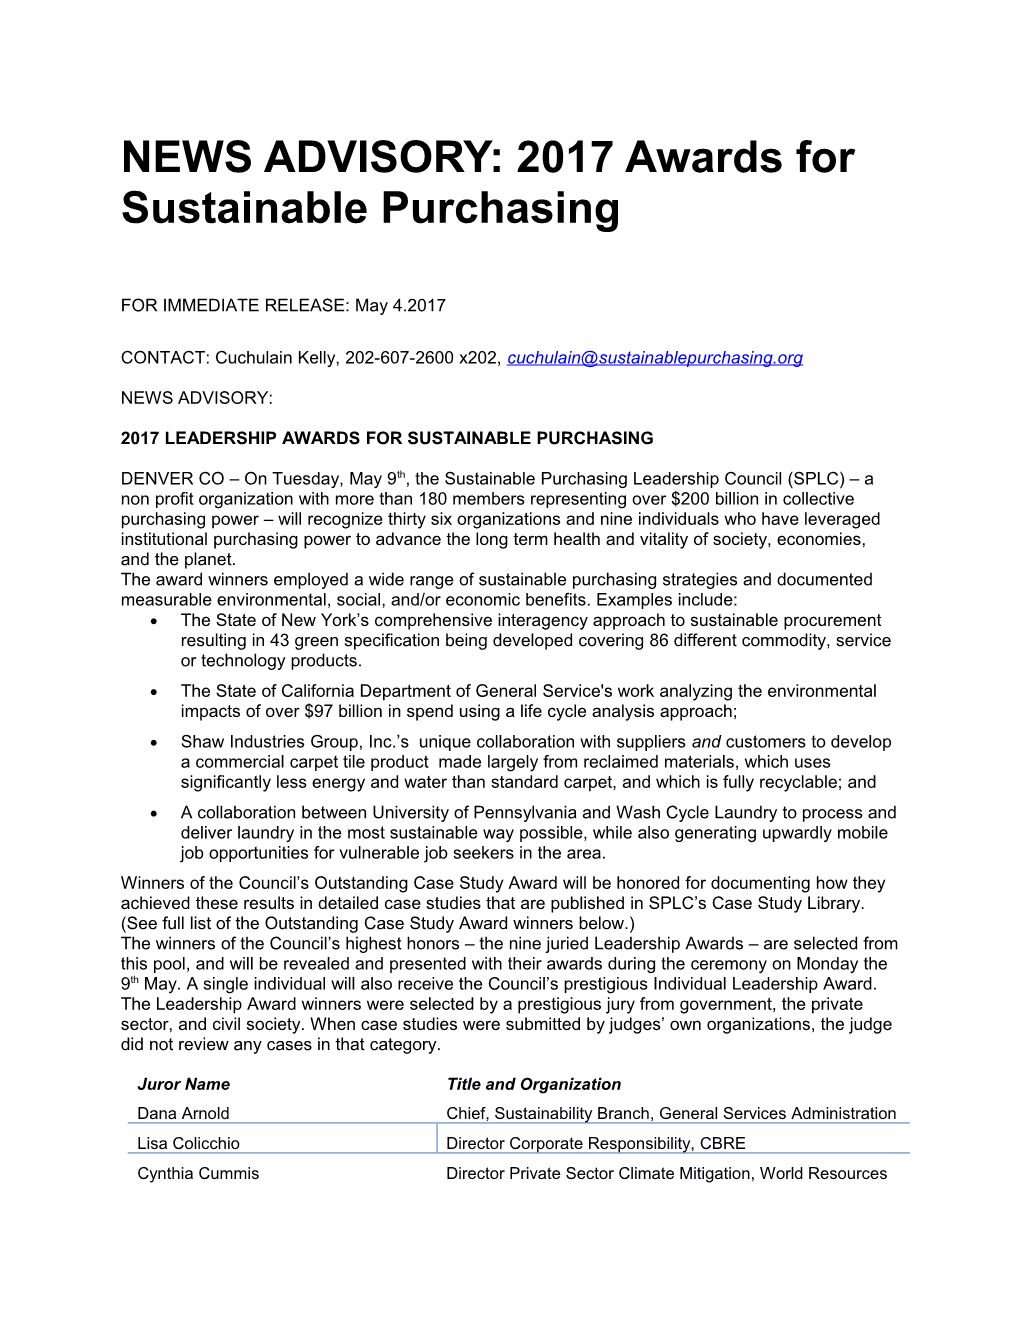 NEWS ADVISORY: 2017 Awards for Sustainable Purchasing